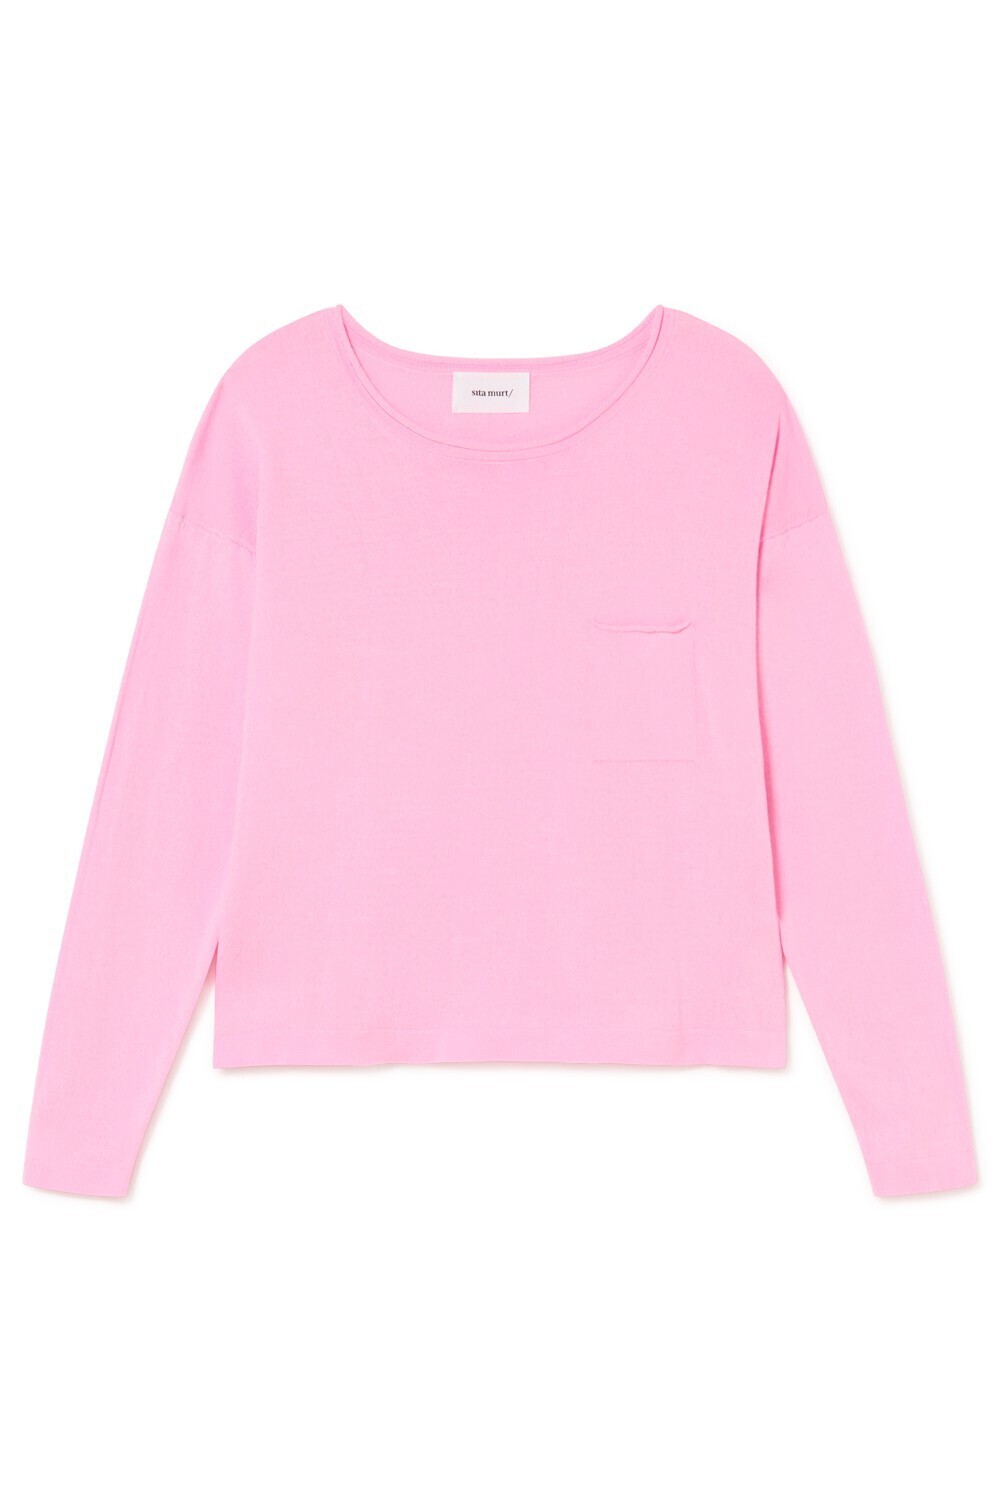 Sita Murt/ knitted sweater roze